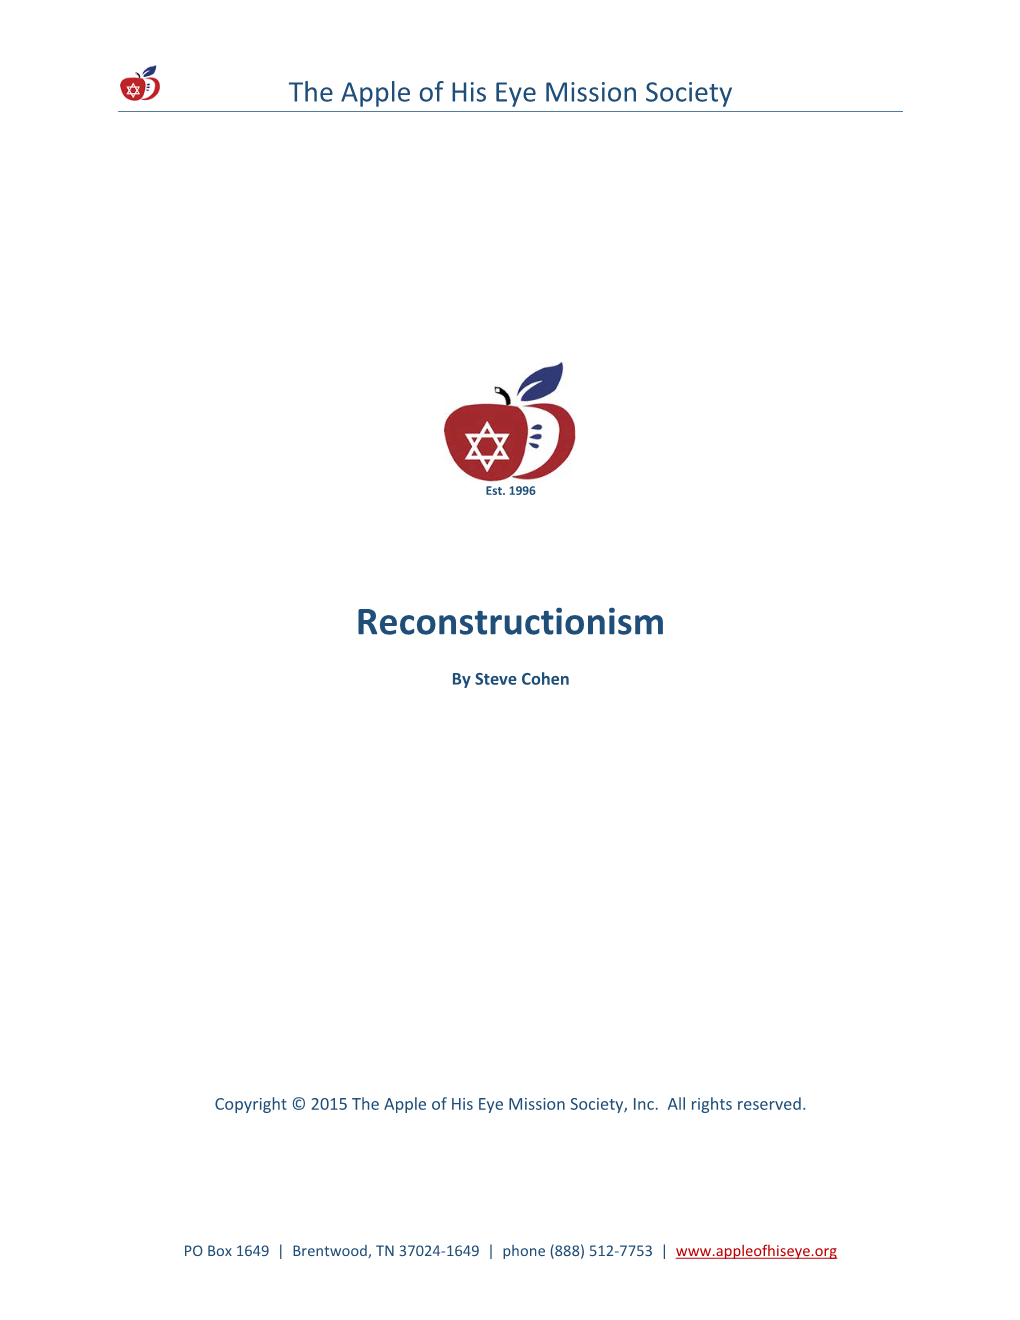 Reconstructionism